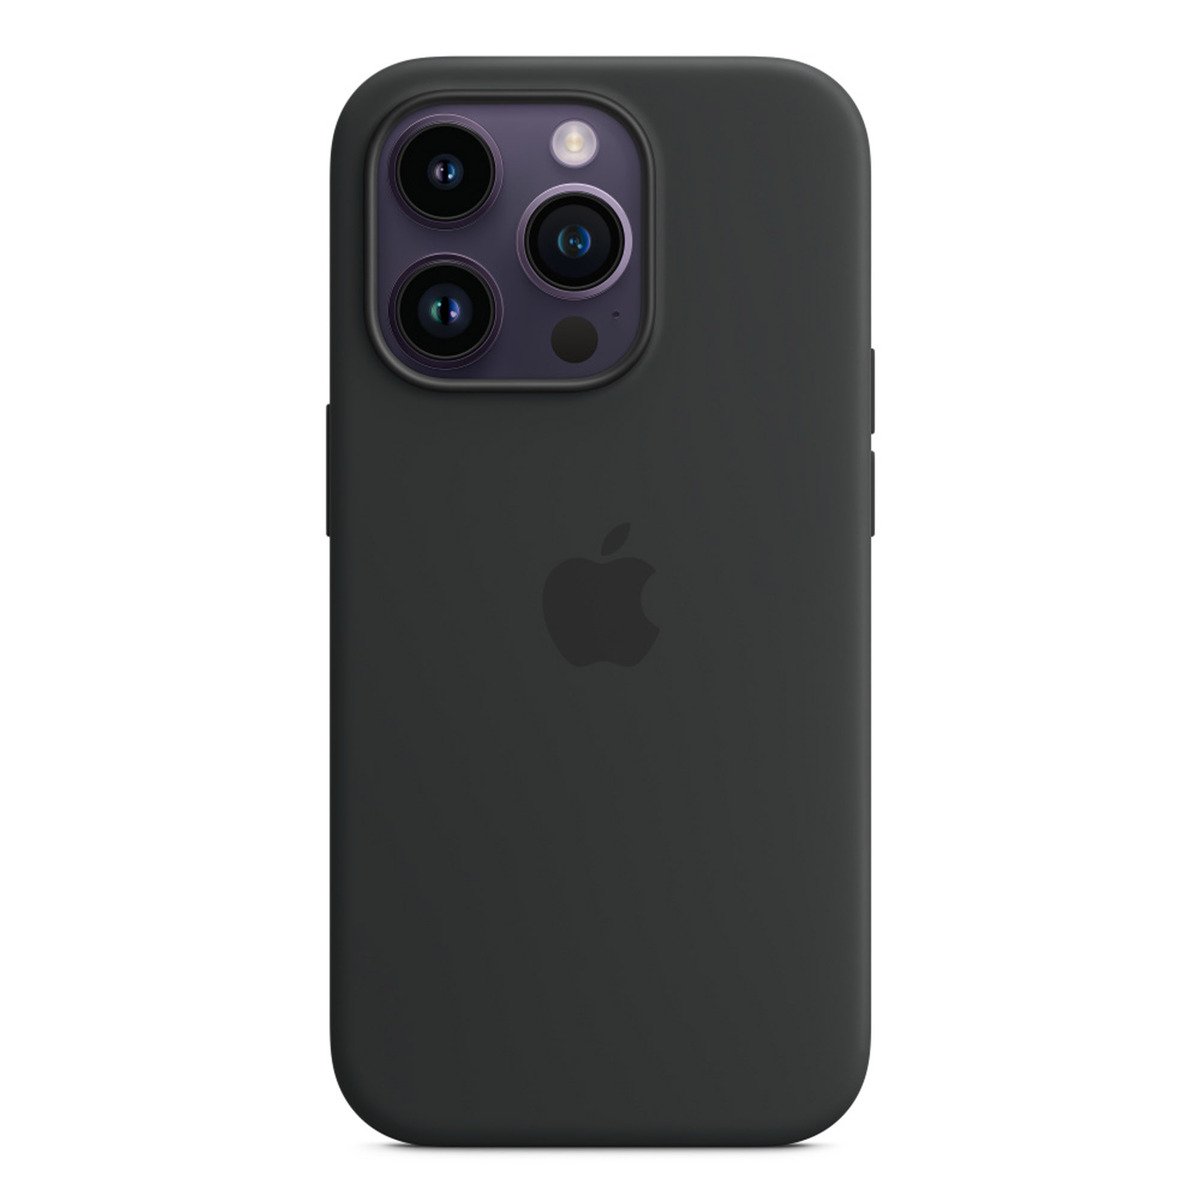 Apple iPhone 11 Pro Silicone Case Black MWYN2ZM/A - Best Buy